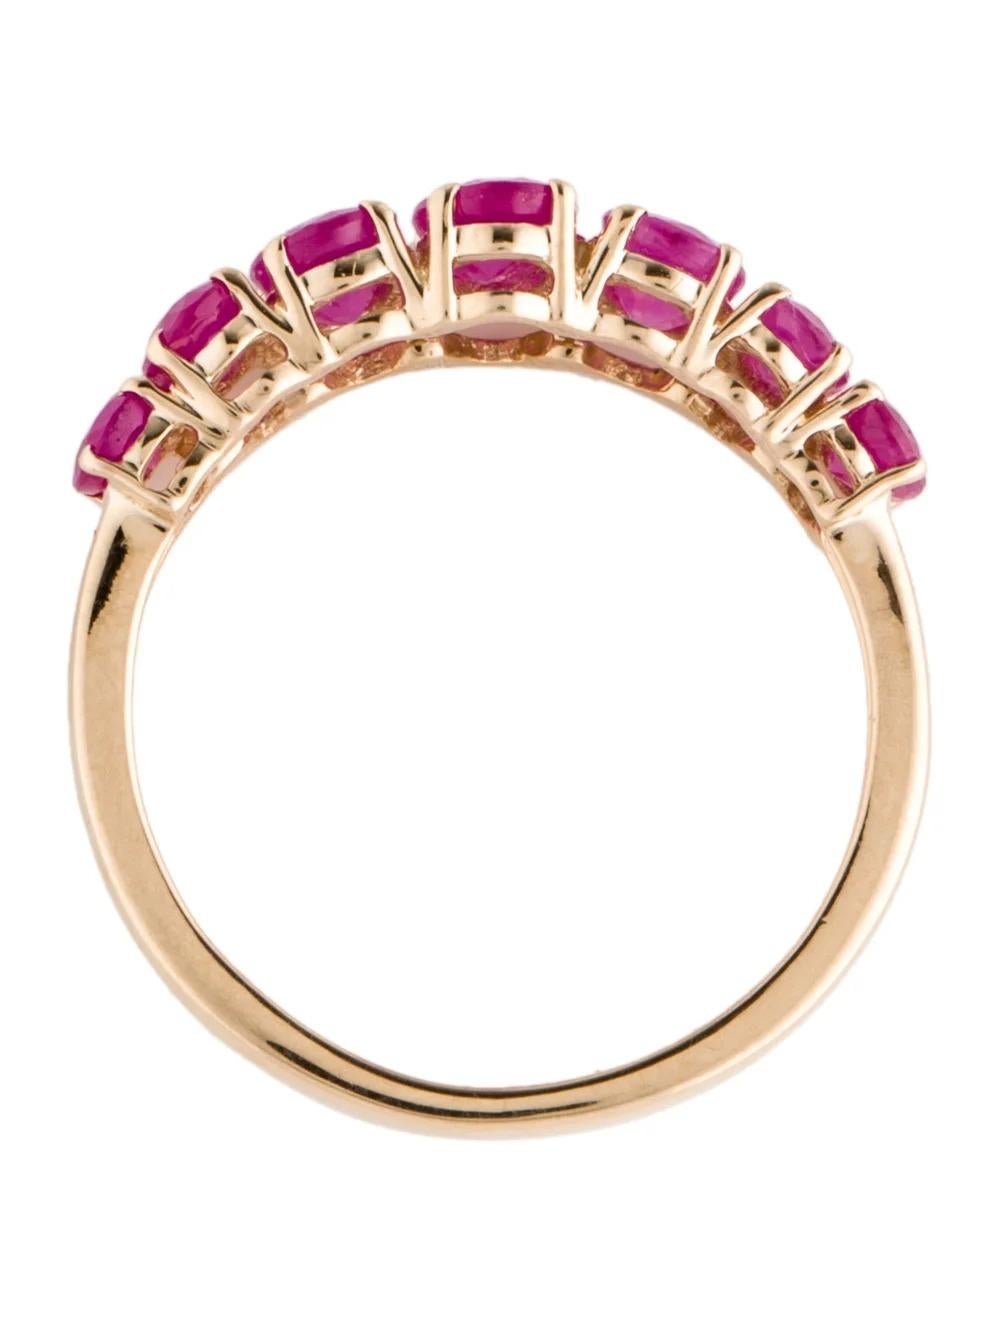 14K Ruby Band Ring Size 8 - Vibrant Gemstone, Yellow Gold, Elegant Design Pour femmes en vente